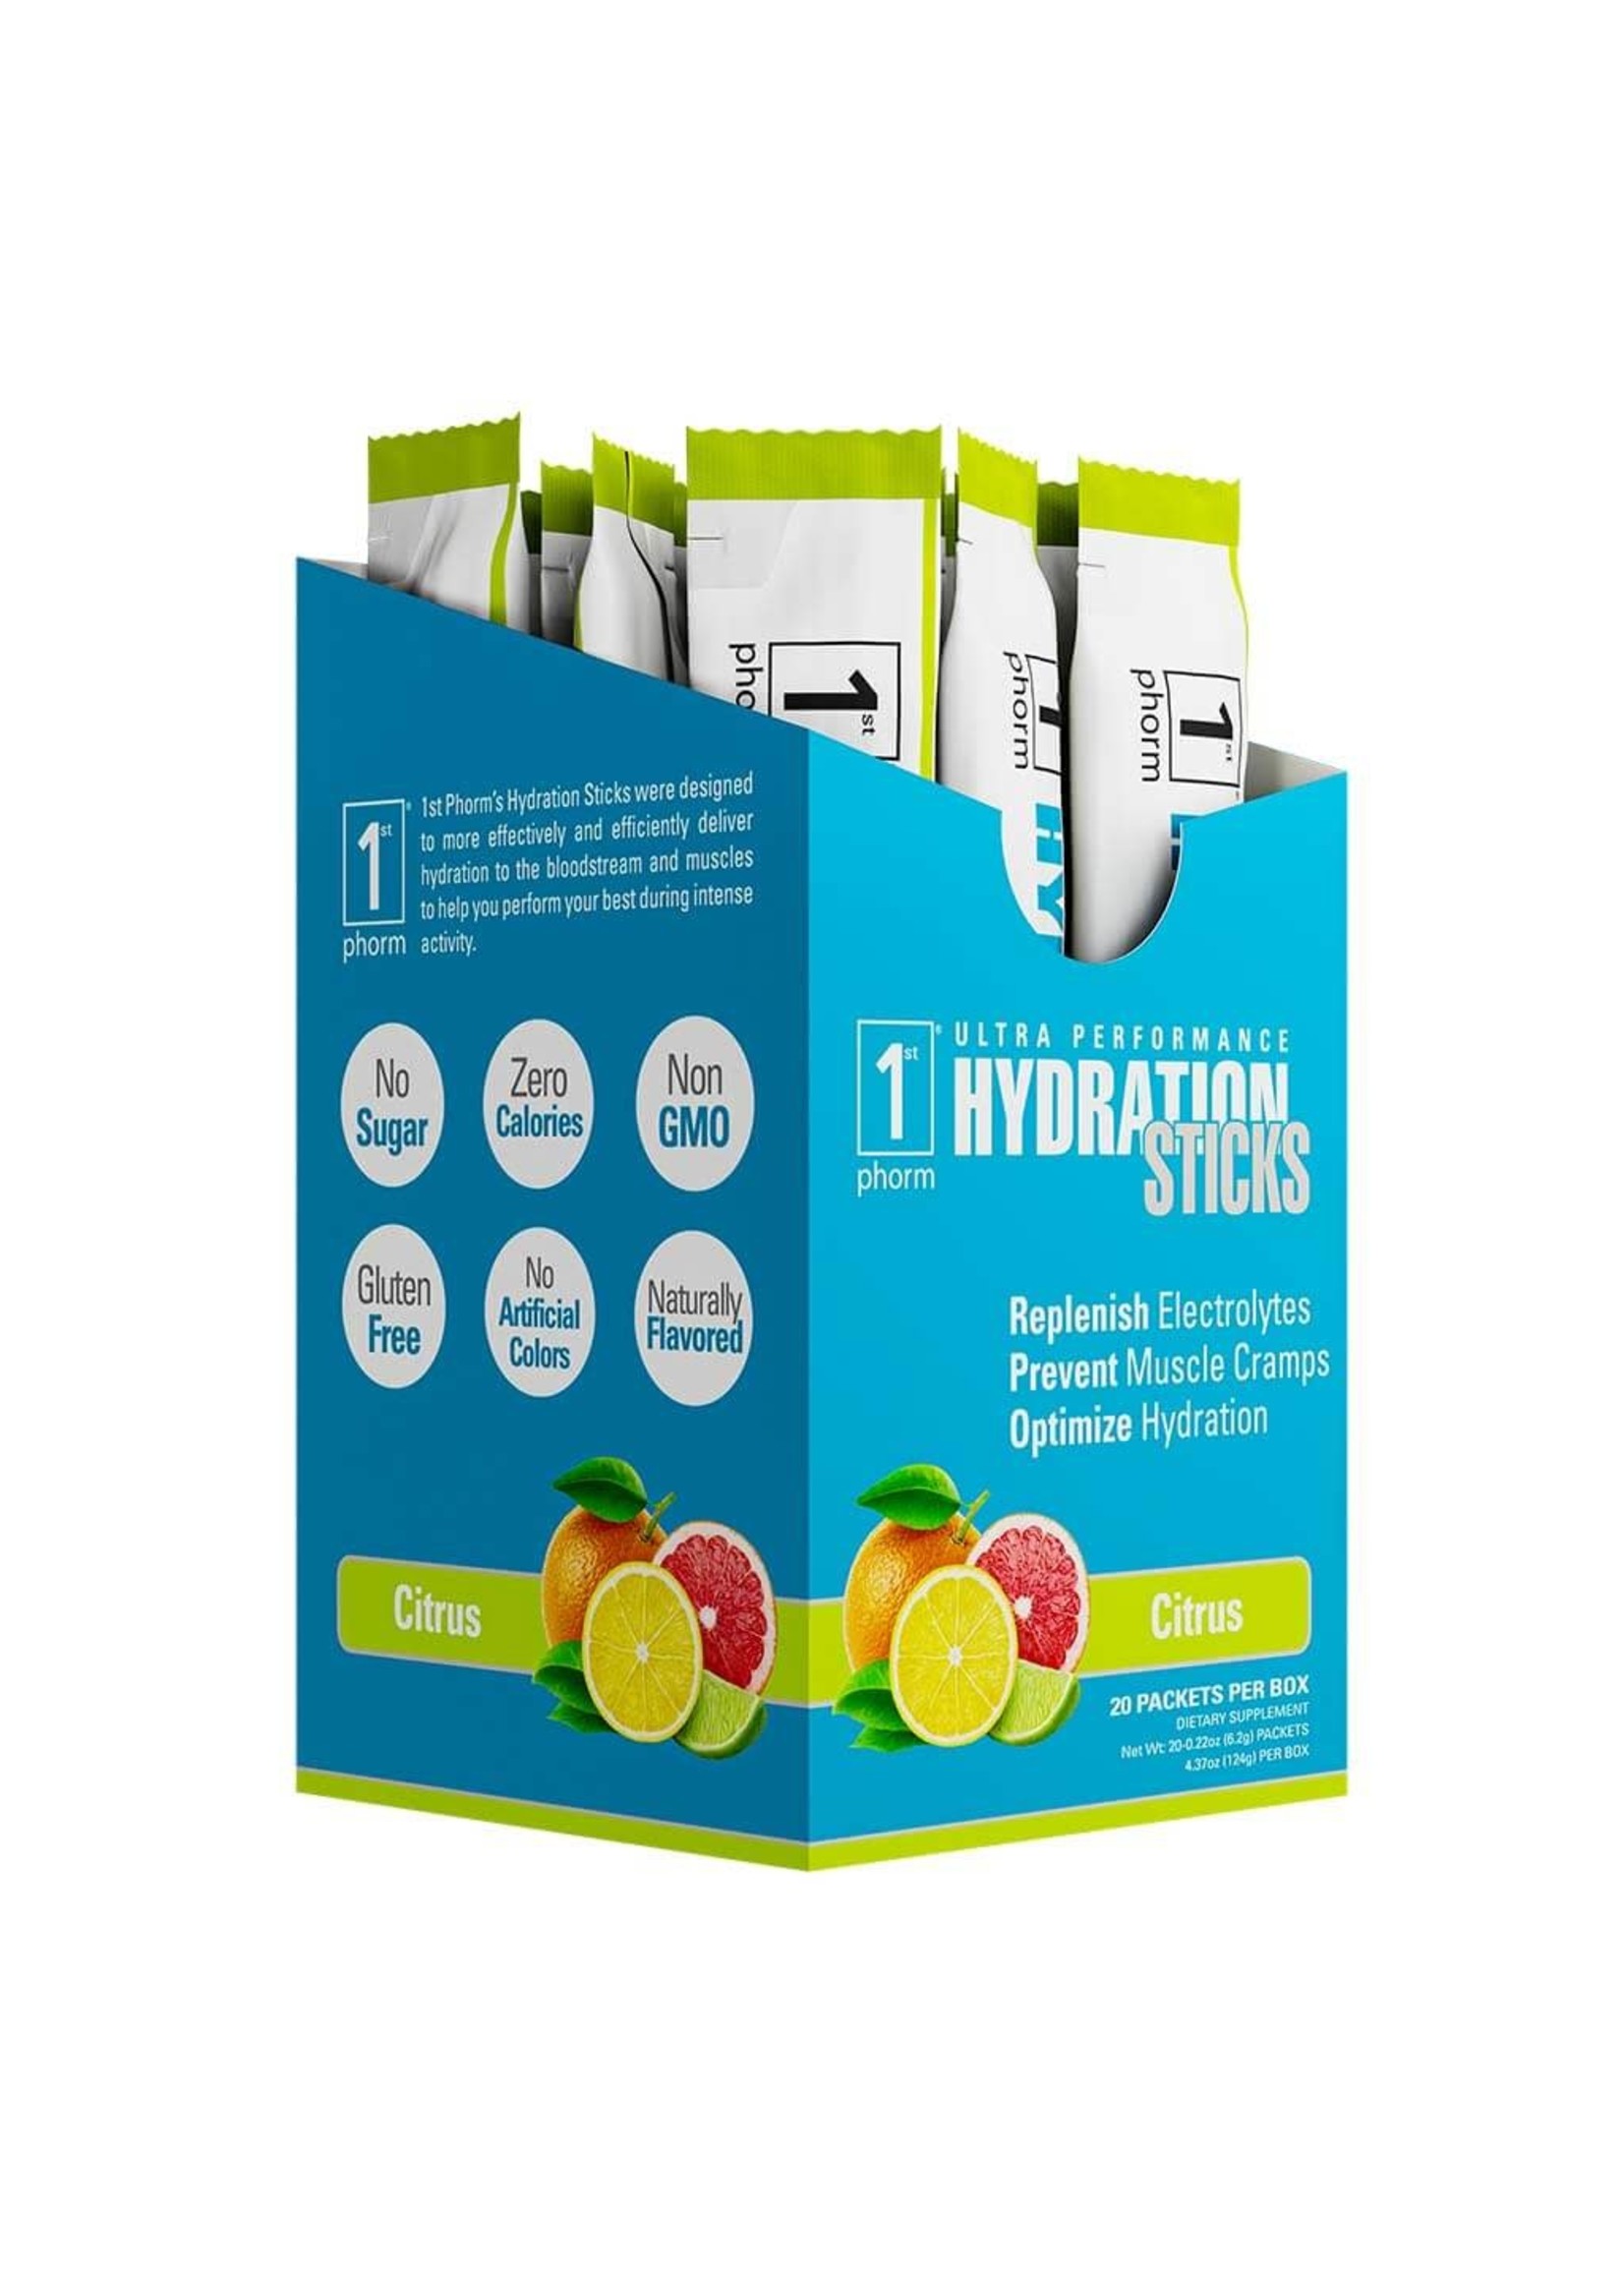 1st Phorm 1stPhorm-Hydration Sticks Citrus 20 Pack